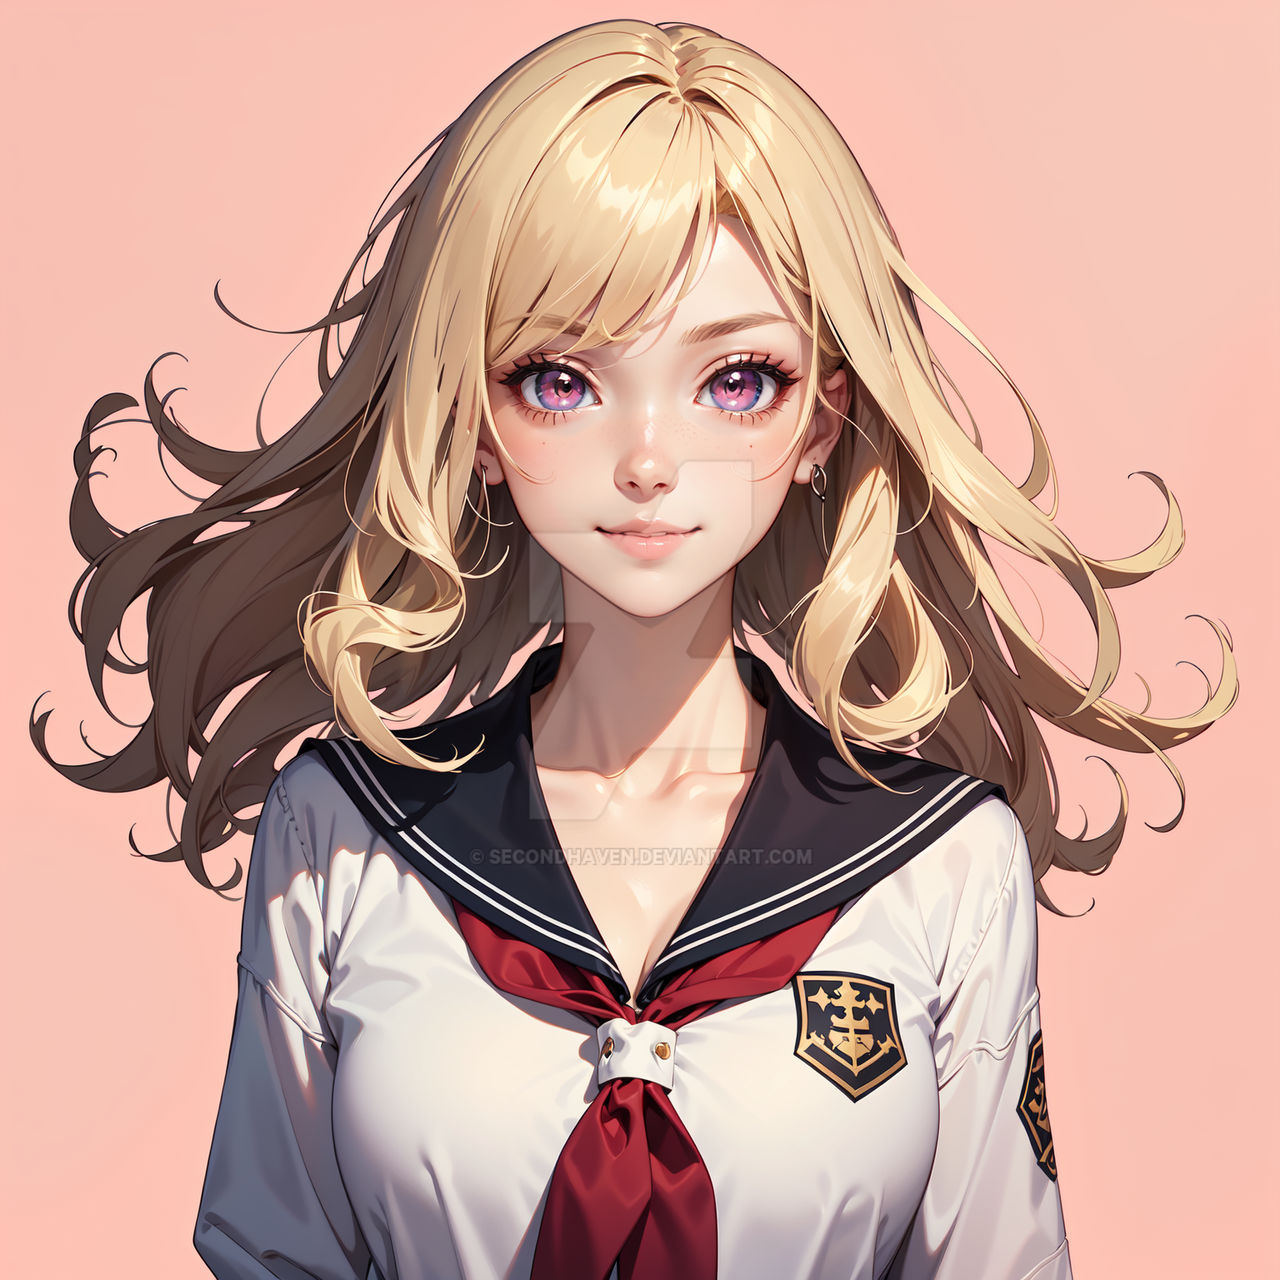 Ann's Profile by Isa-Love-Anime on DeviantArt